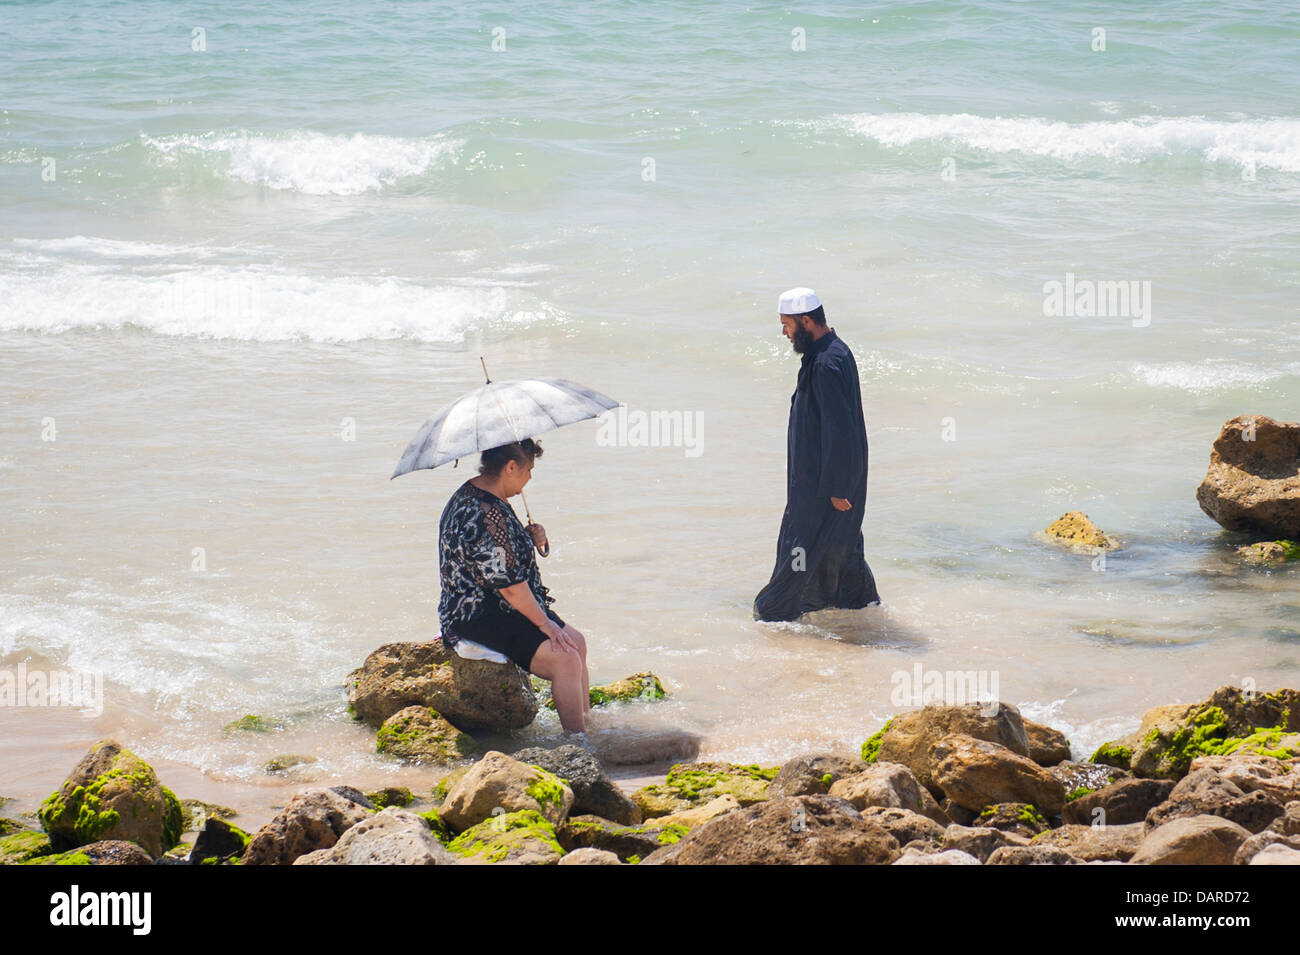 Israel Tel Aviv Jaffa Yafo Manta Ray Beach elderly lady women rock sea foam umbrella parasol sonnenschirm Arab man thorb thobe Stock Photo